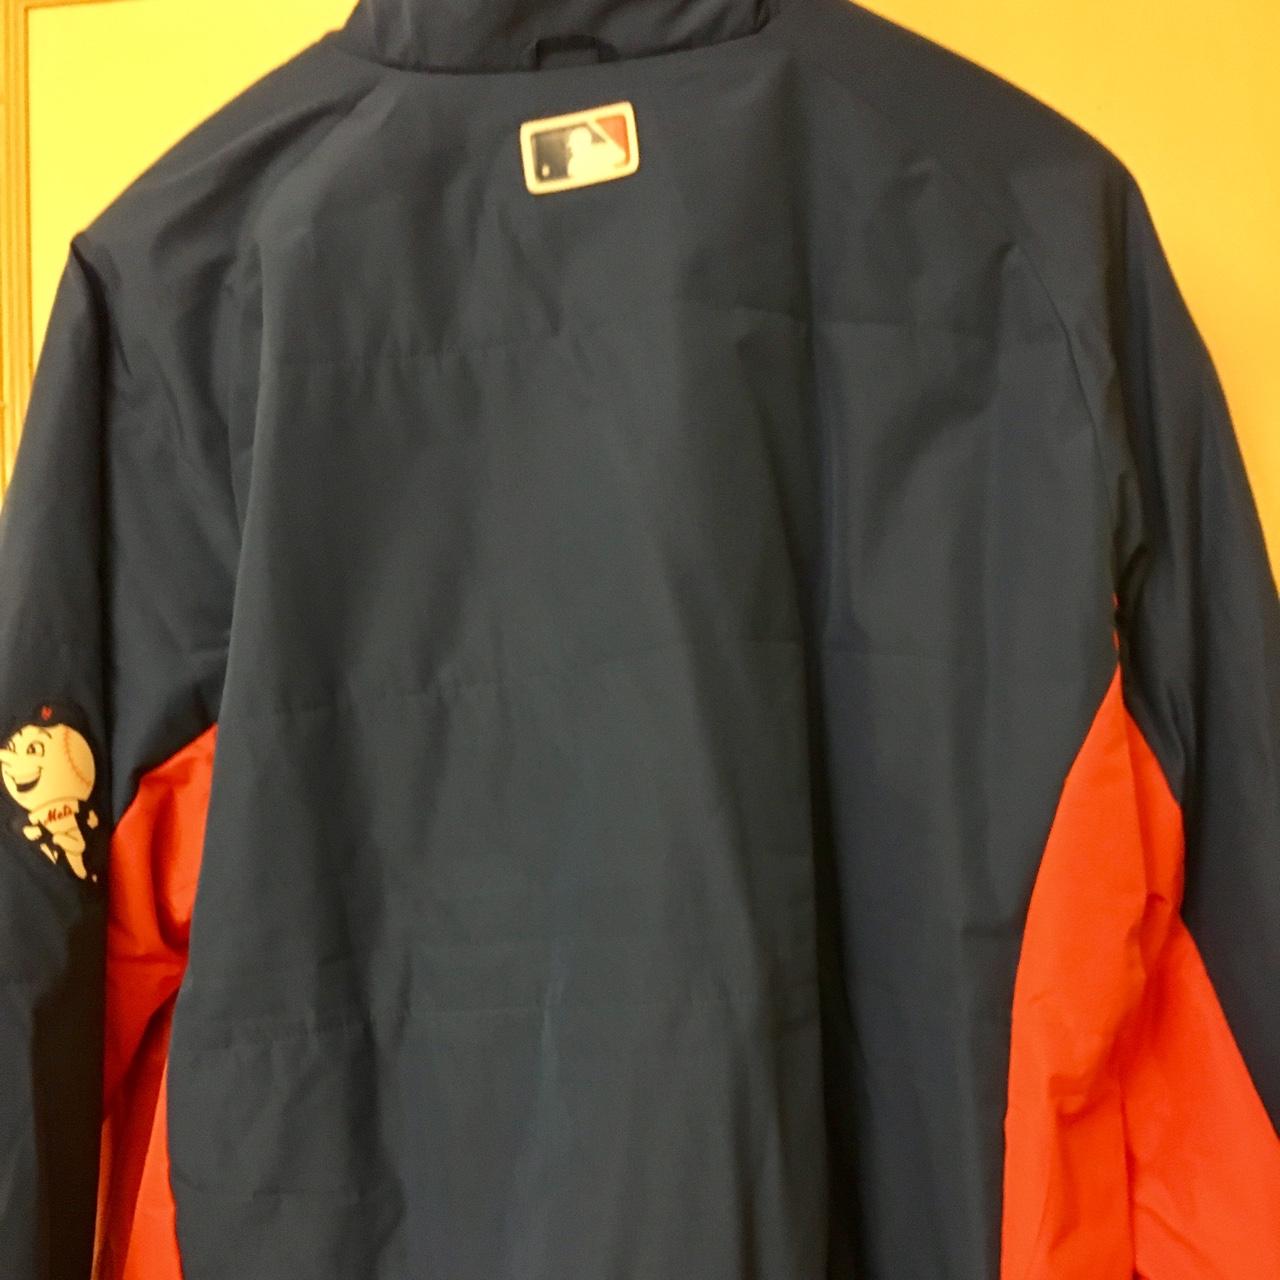 MLB New York Mets Baseball windbreaker jacket size - Depop